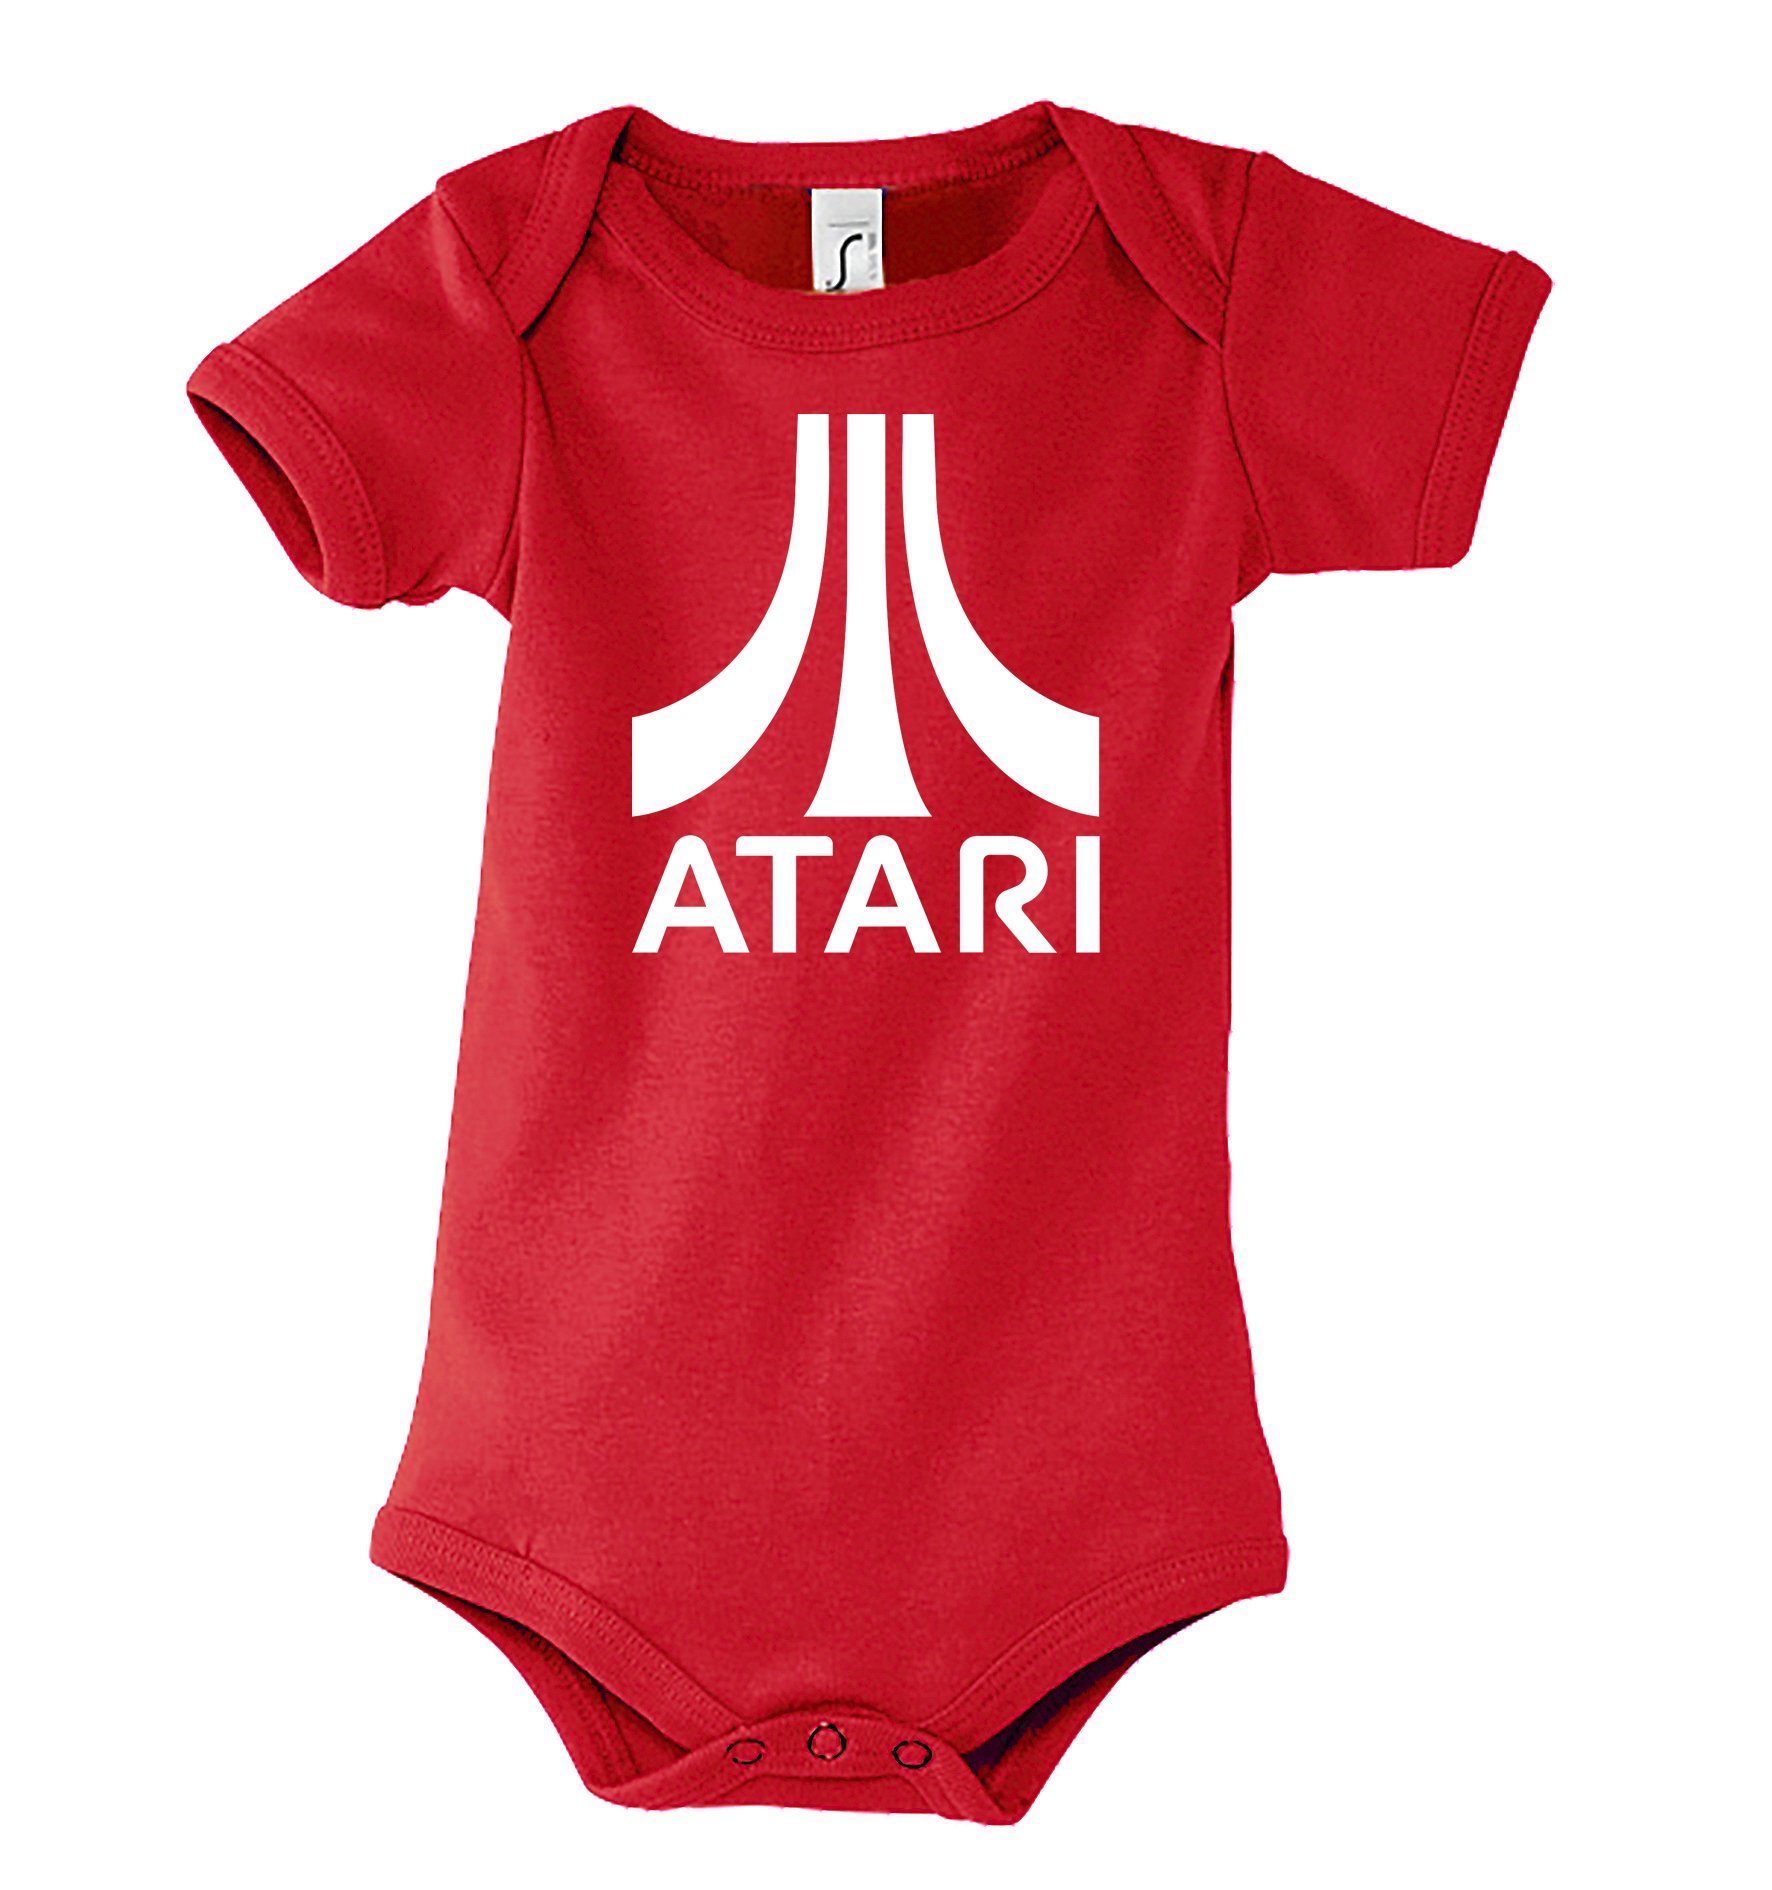 Frontprint Rot in Atari Designz Kurzarm Design, Body Baby Youth mit tollem Kurzarmbody Strampler